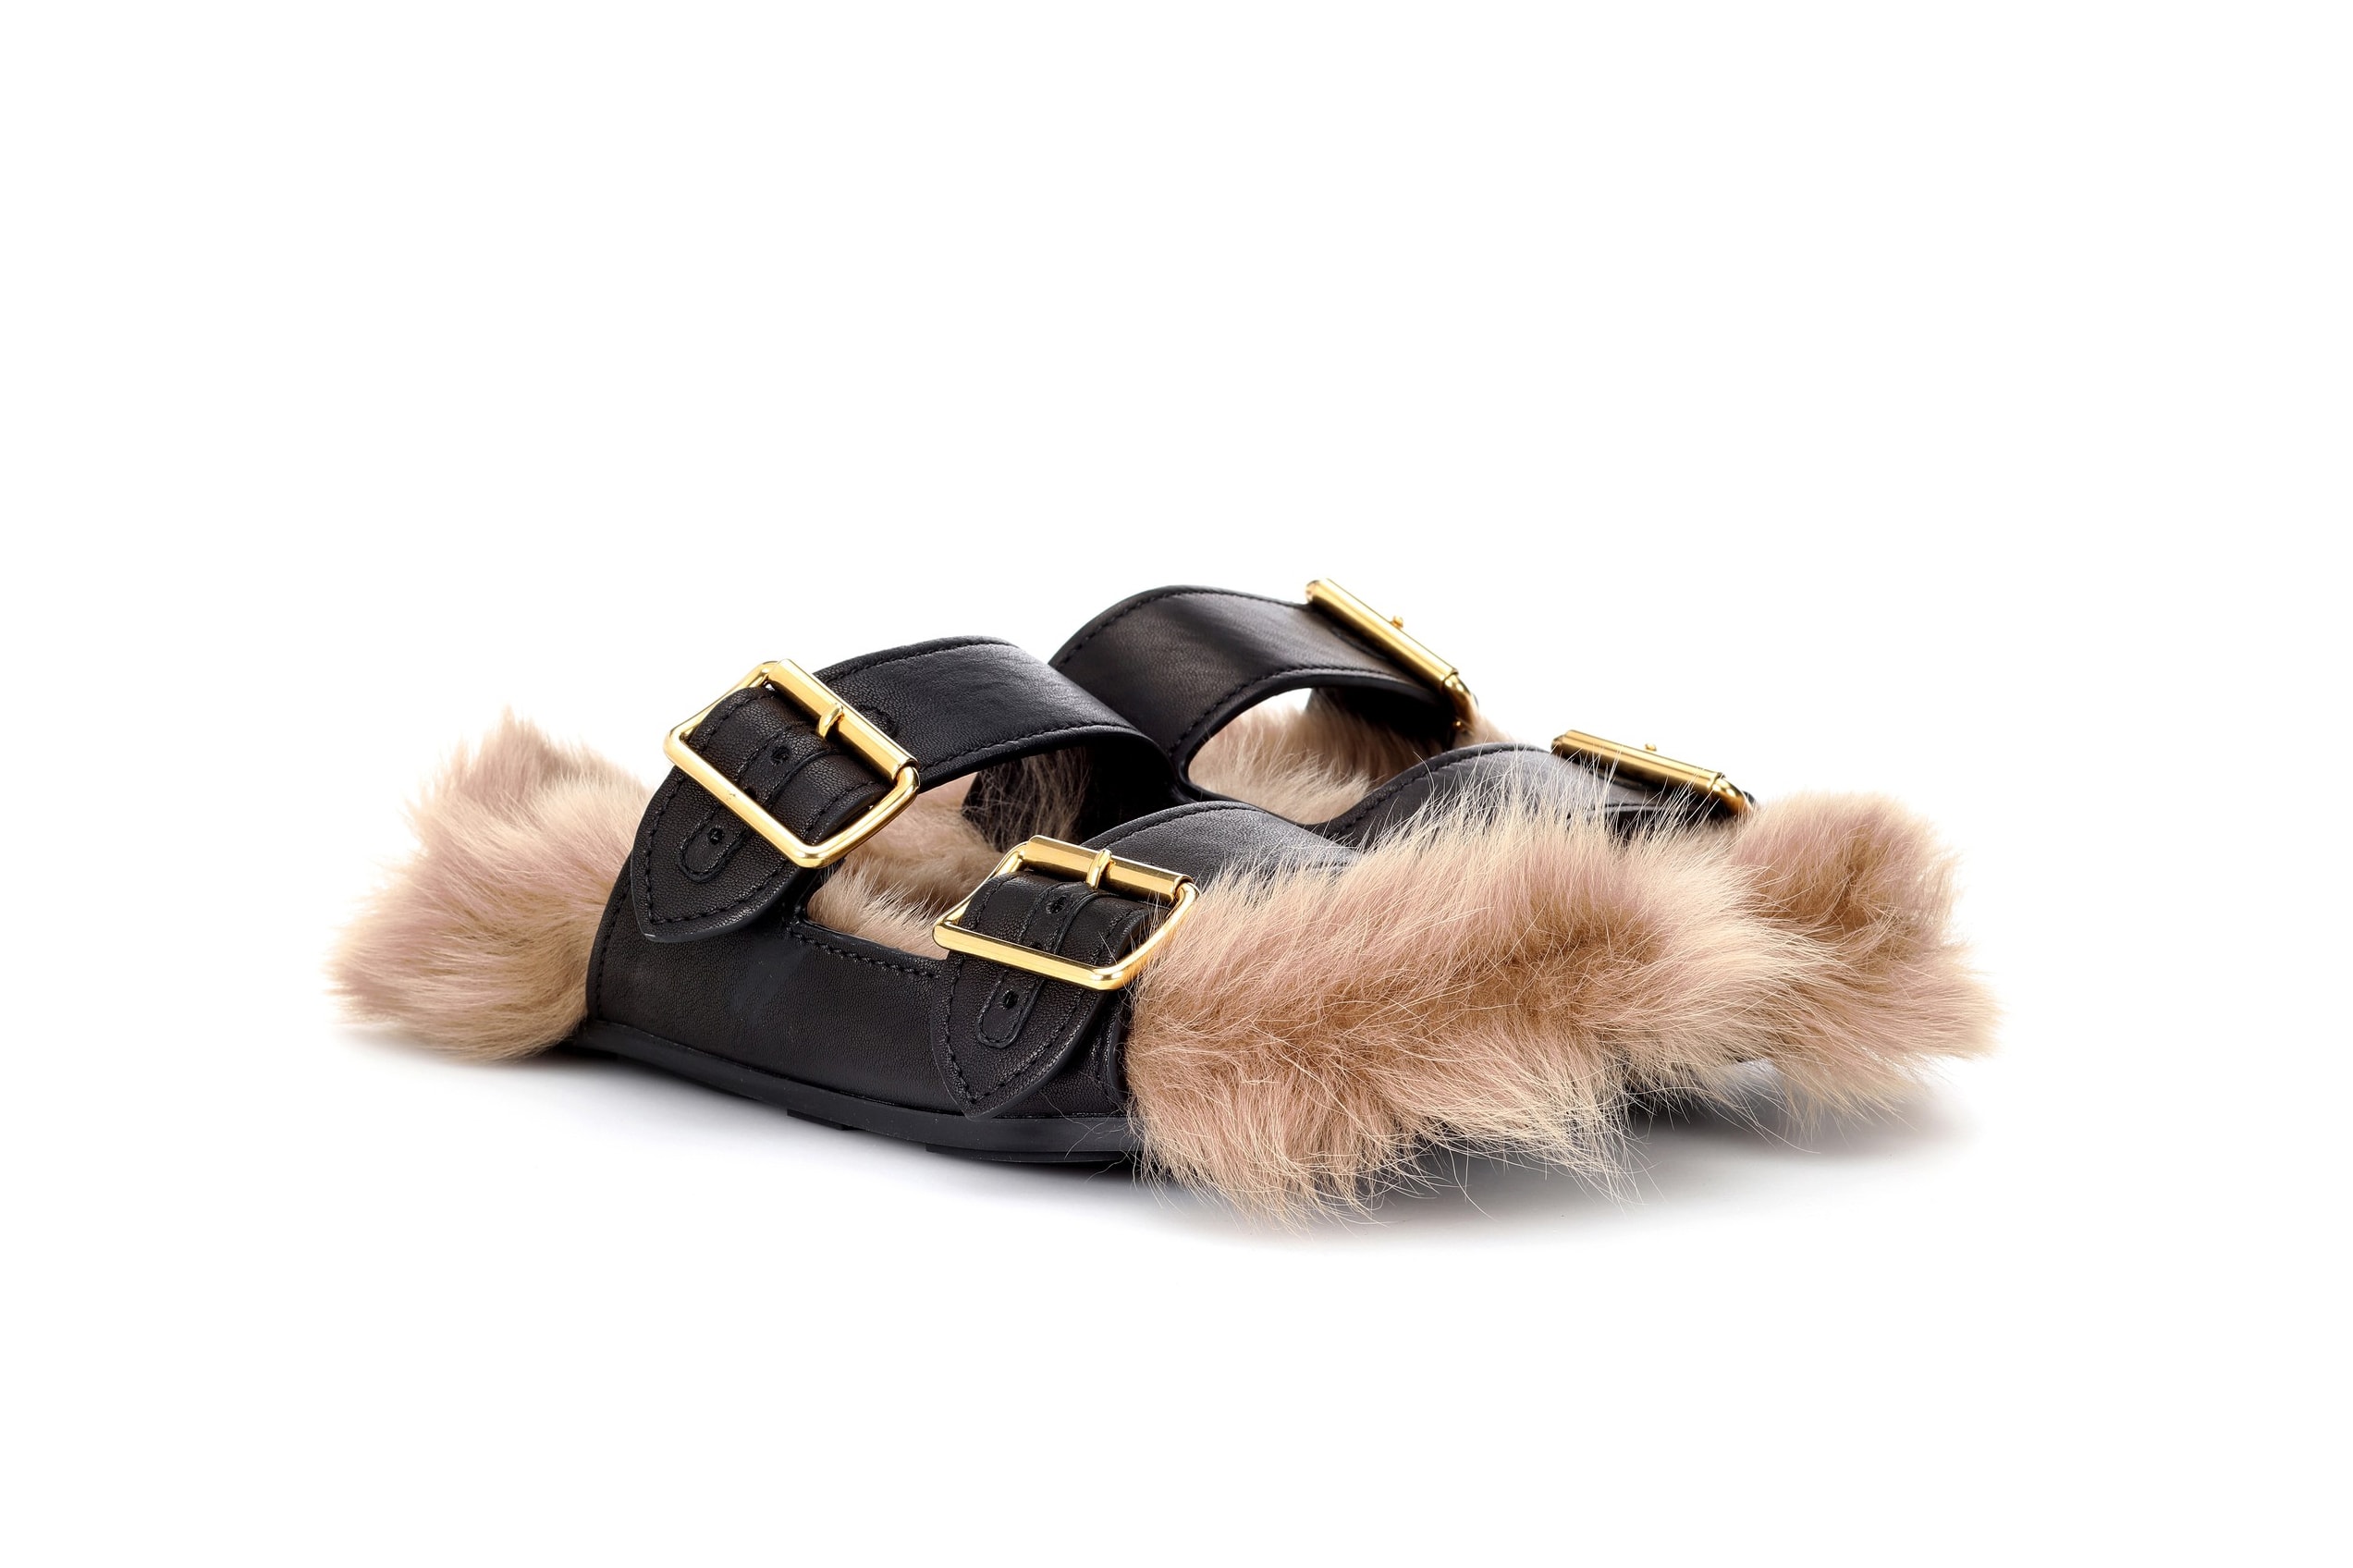 Where to Buy Prada's Fur-lined Leather Sandals Miuccia Prada Shoes Birkenstock Summer Fall